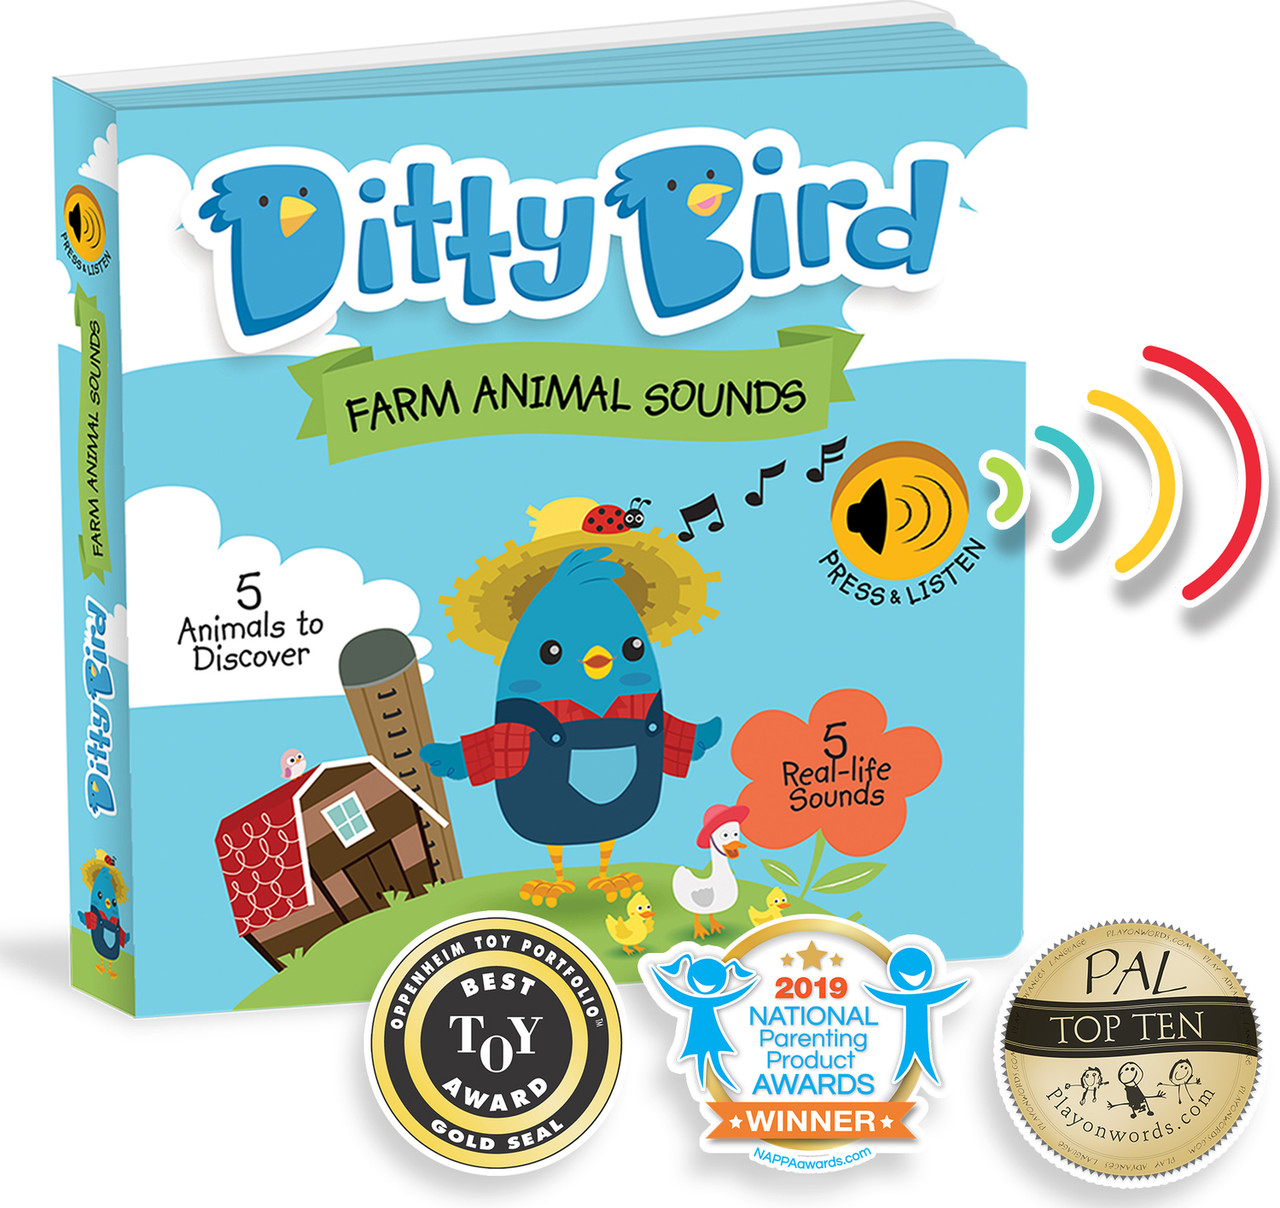 Ditty Bird Baby Sound Book: Farm Animal Sounds 3